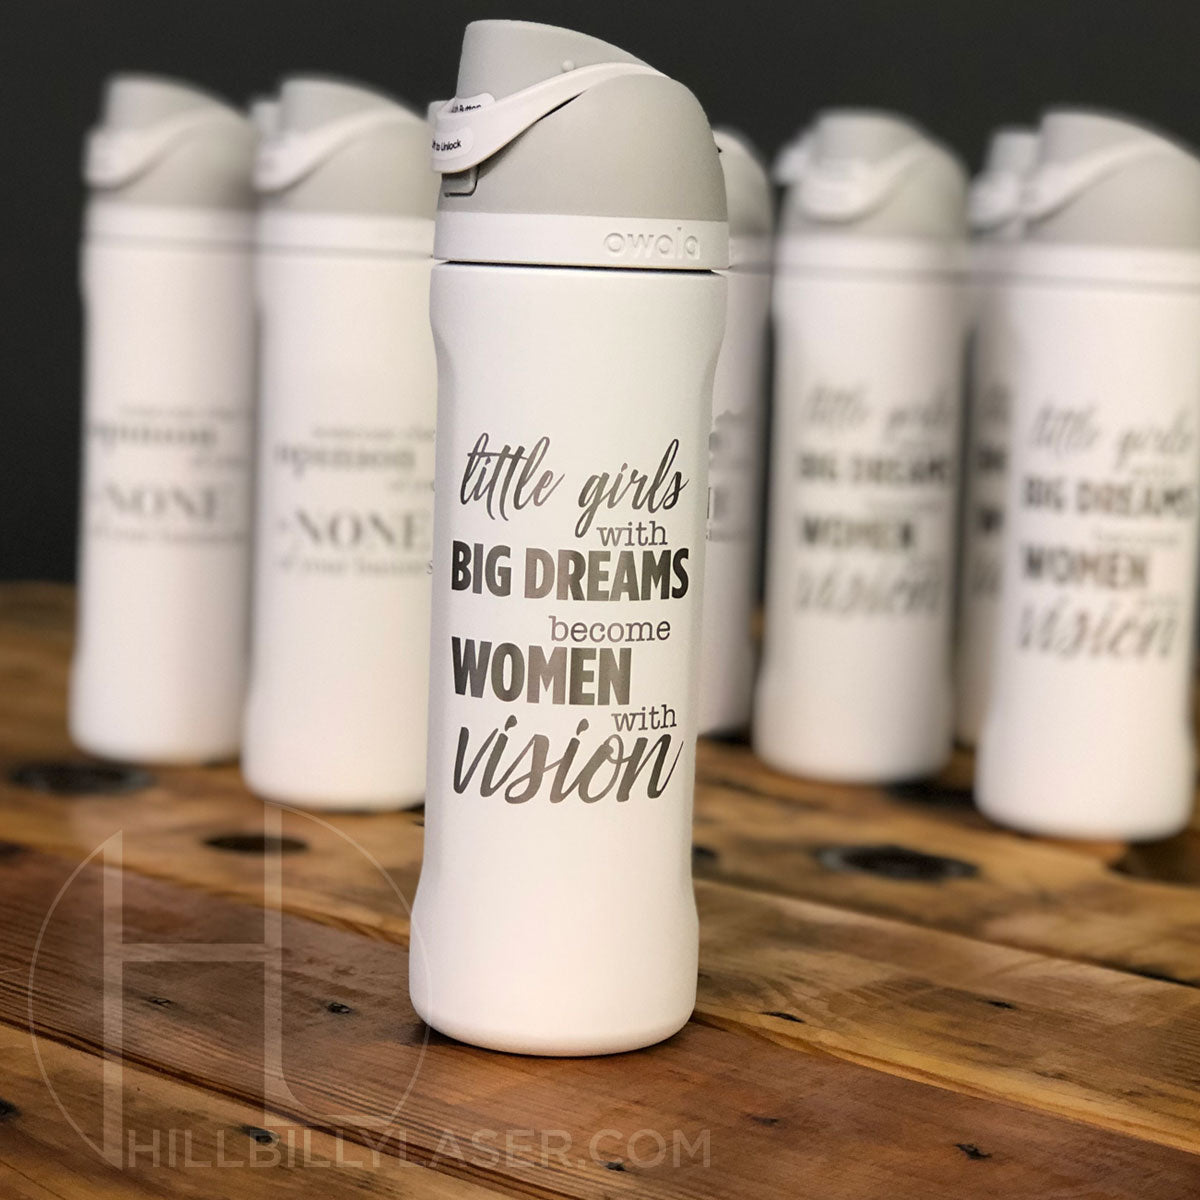 BULK Owala Freesip 24oz Personalized Water Bottle Insulated